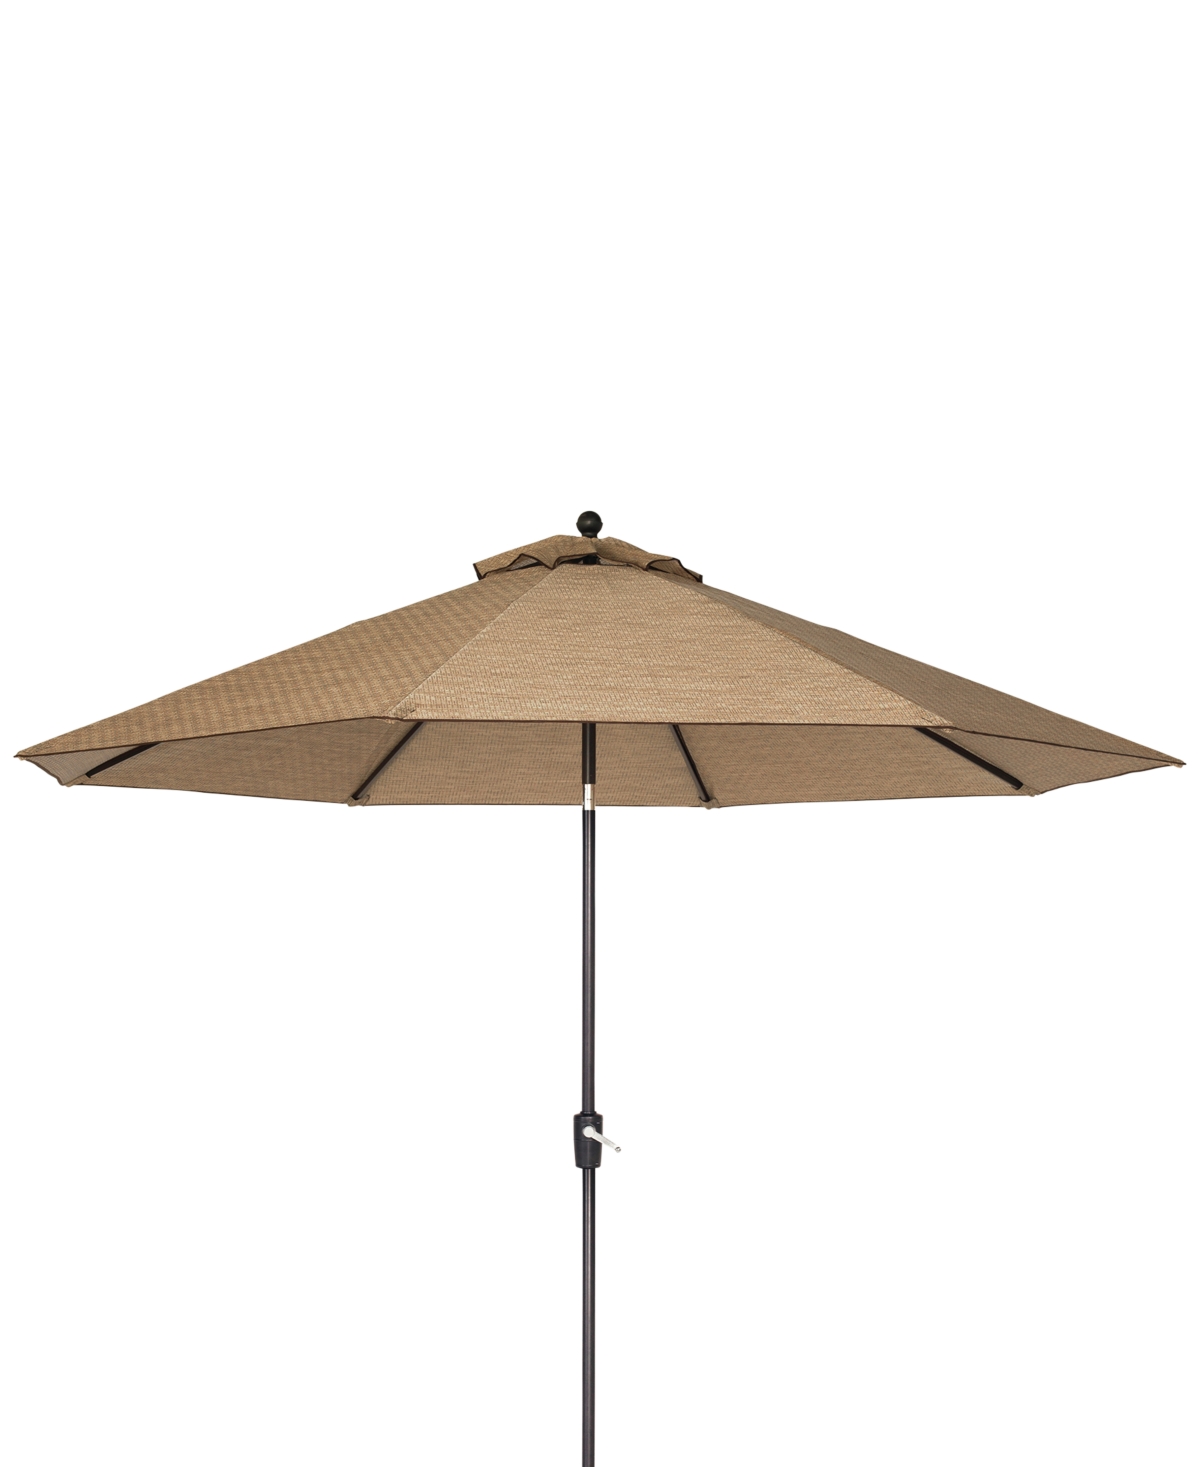 Beachmont Ii Outdoor 11 Umbrella, Created for Macys